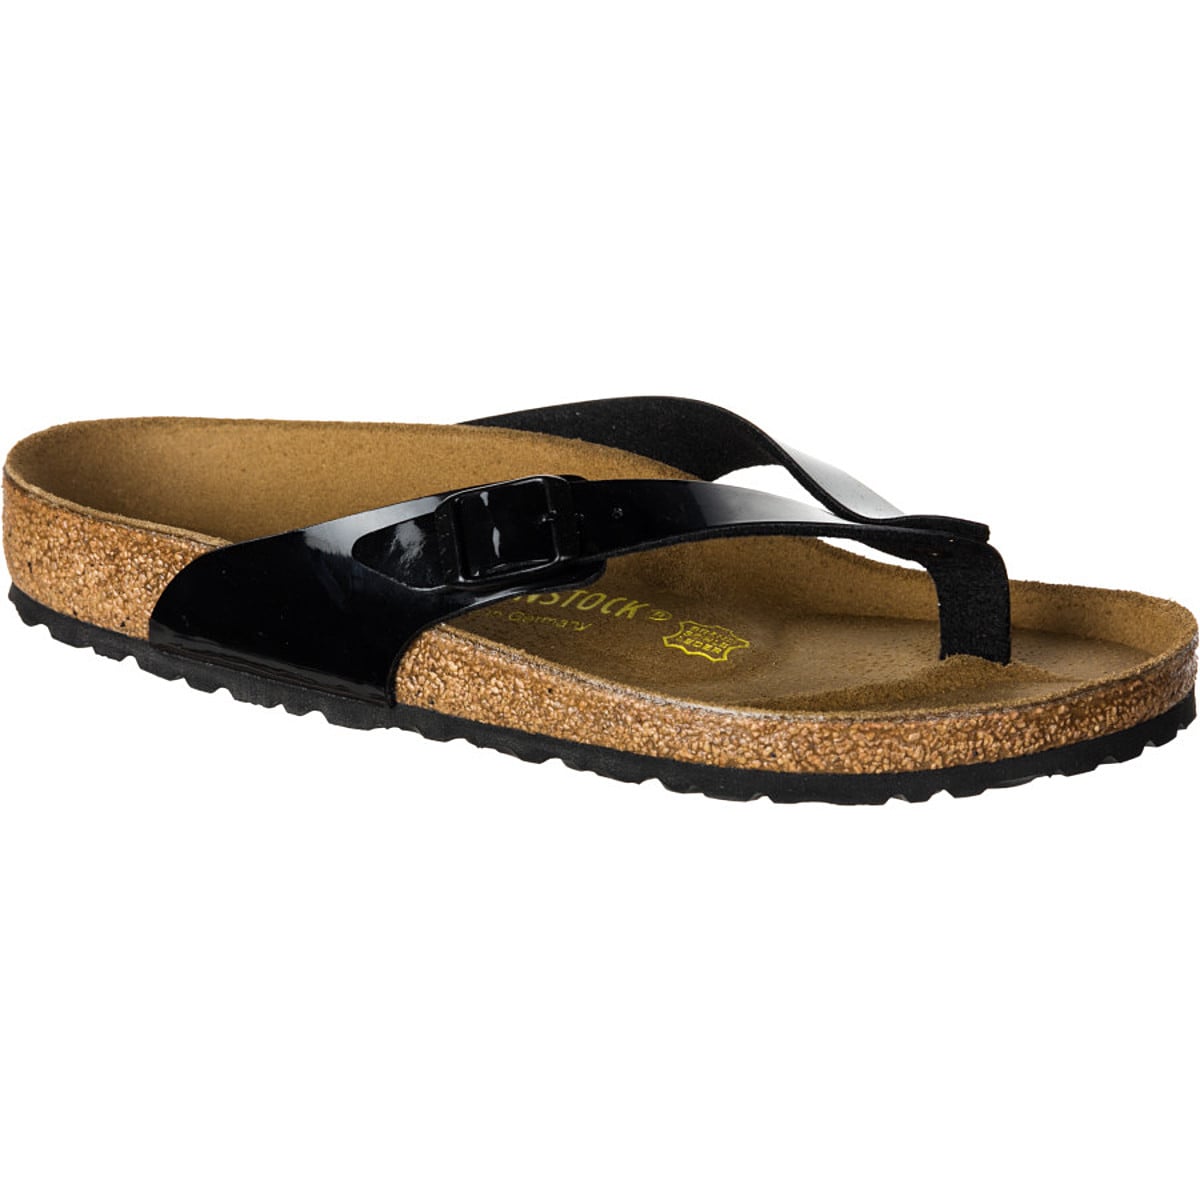 Birkenstock Adria Patent Sandal - Women's -